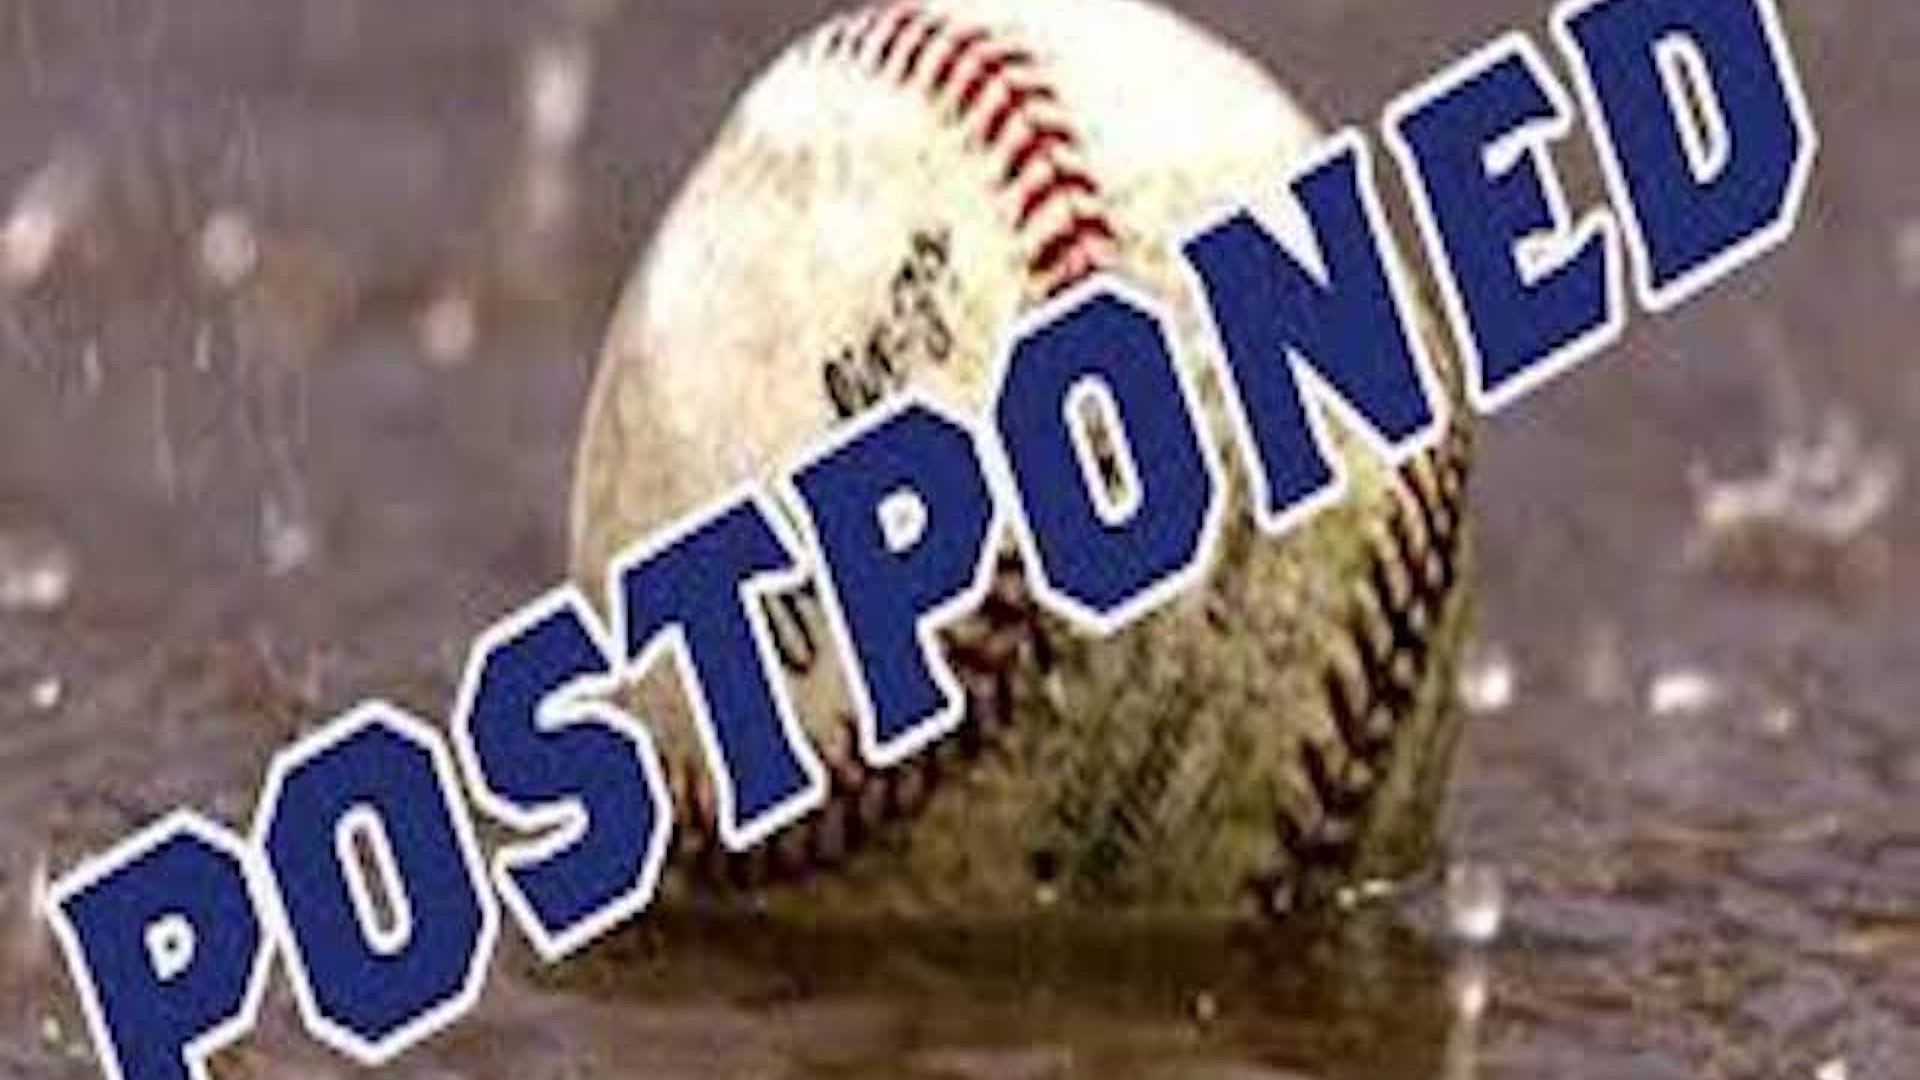 Slide 5 - Dragon Baseball game for tonight, postponed until tomorrow